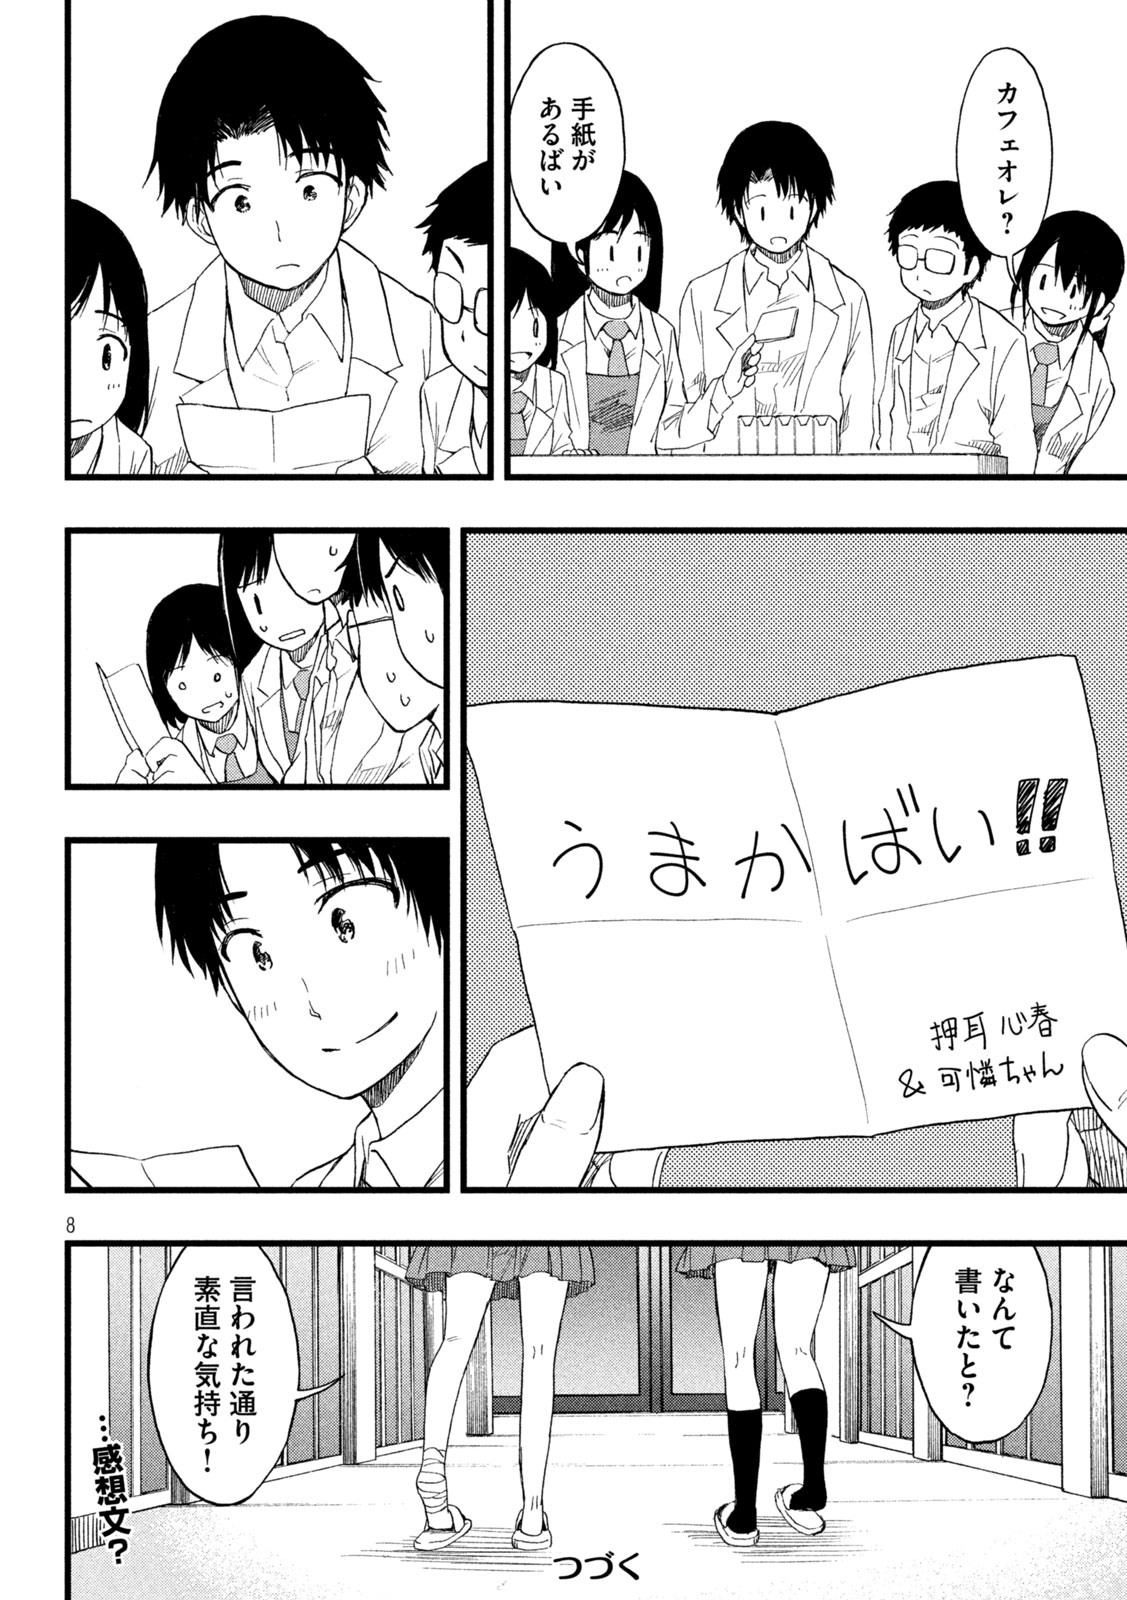 Koharu haru! - Chapter 58 - Page 4